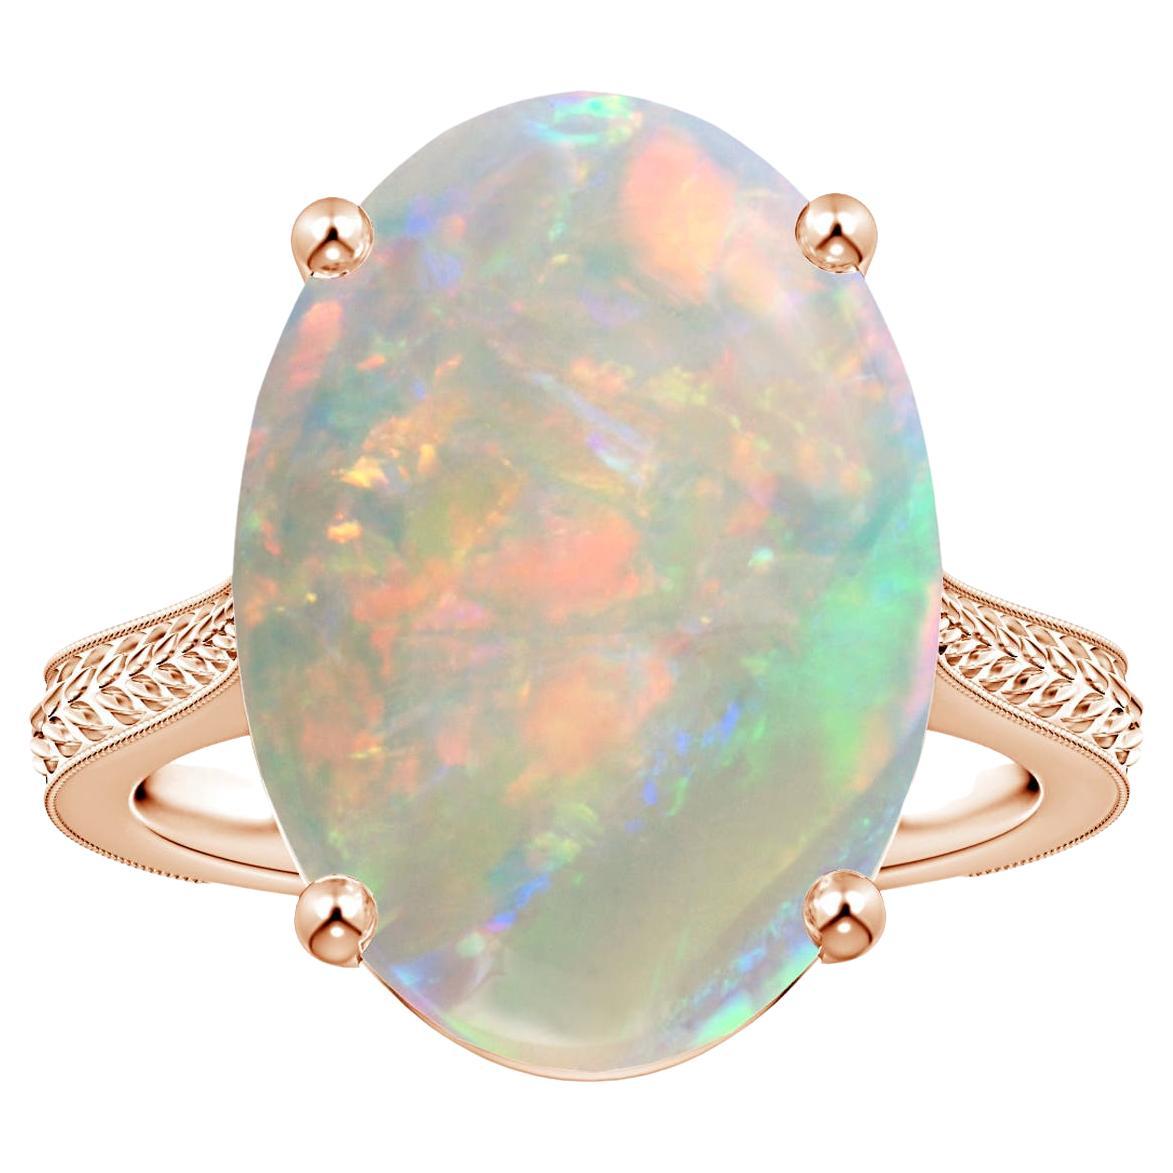 For Sale:  ANGARA GIA Certified Emerald-Cut Morganite Ring in Rose Gold with Milgrain